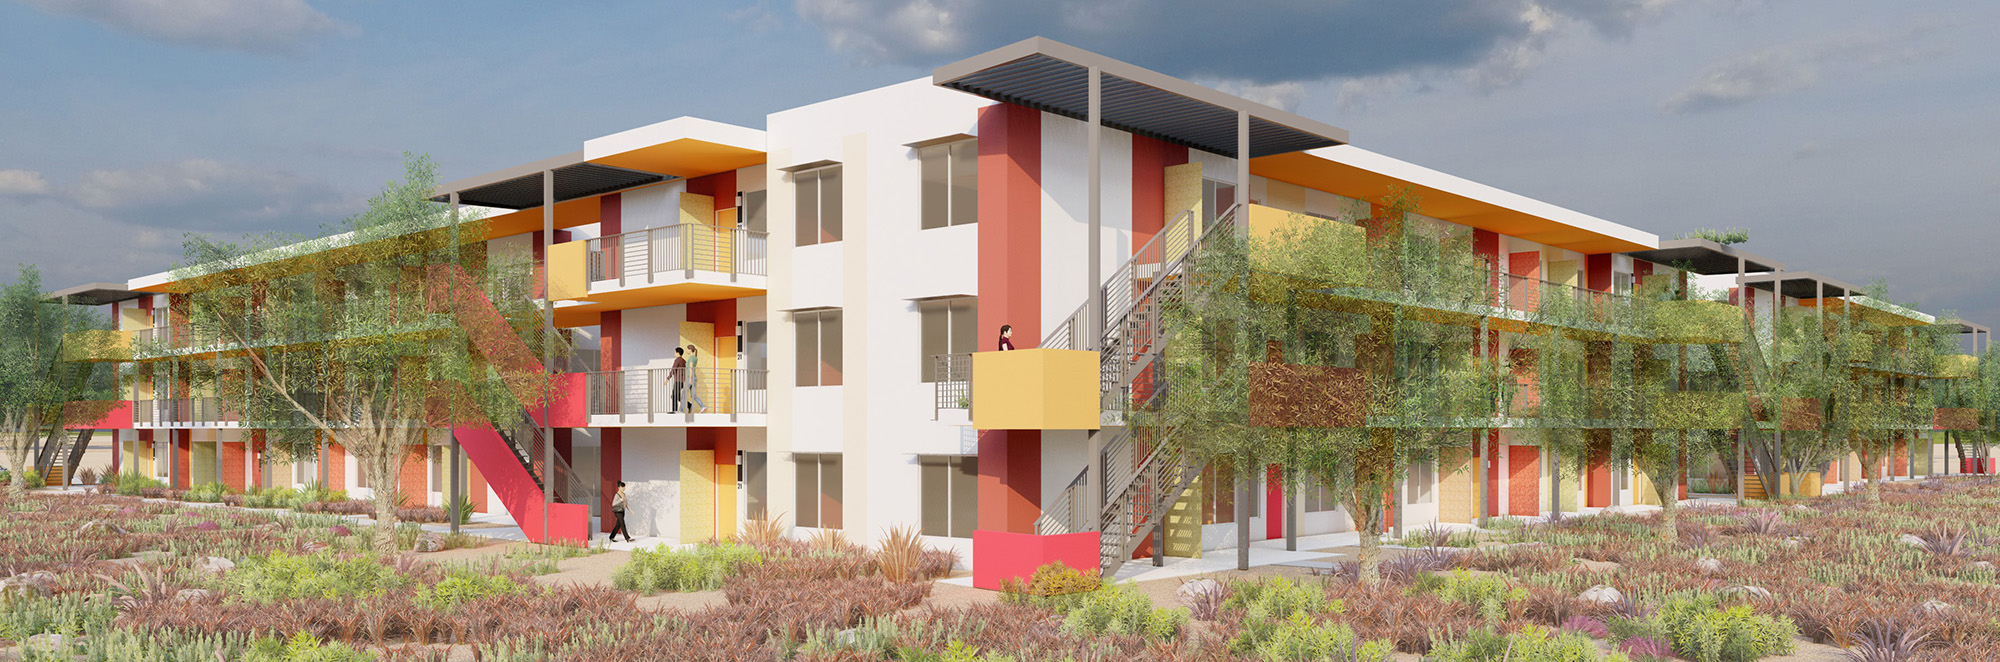 affordable housing multifamily community rendering